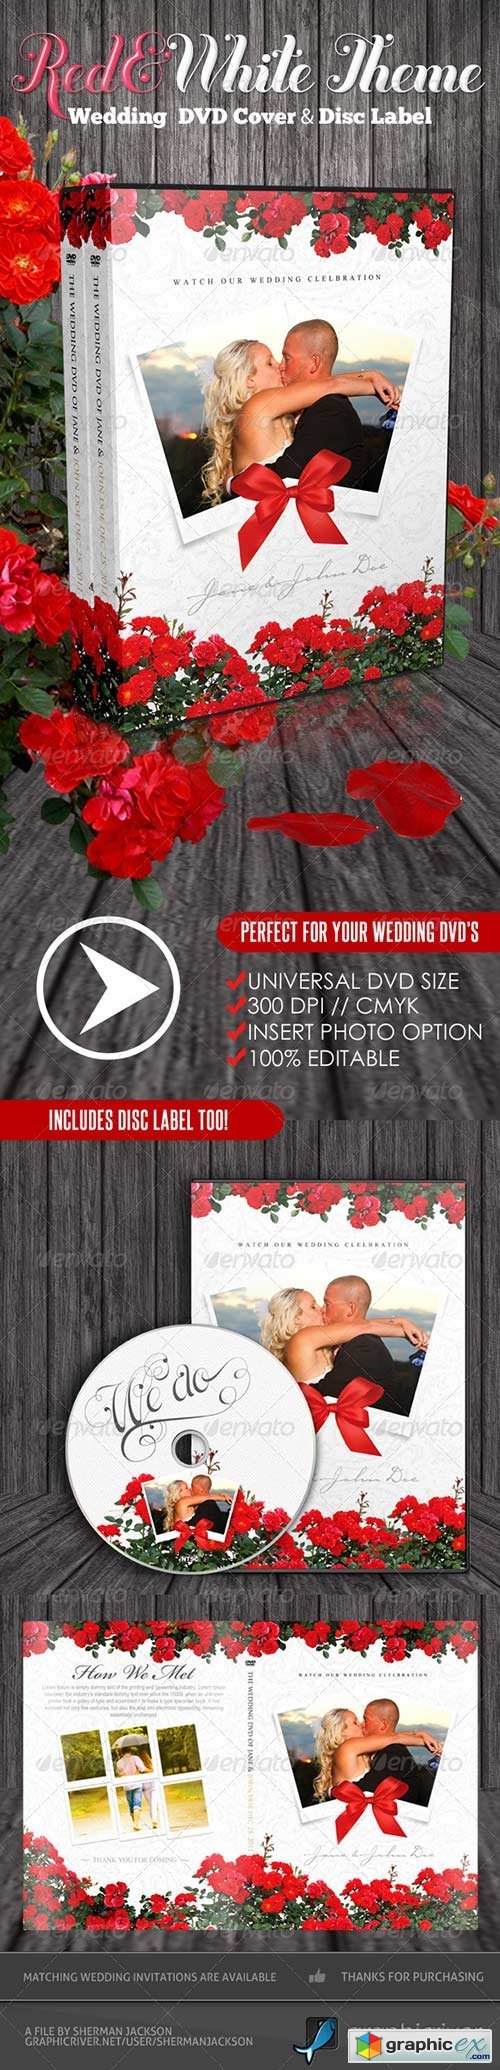 Red & White Theme Wedding DVD & Disc Label